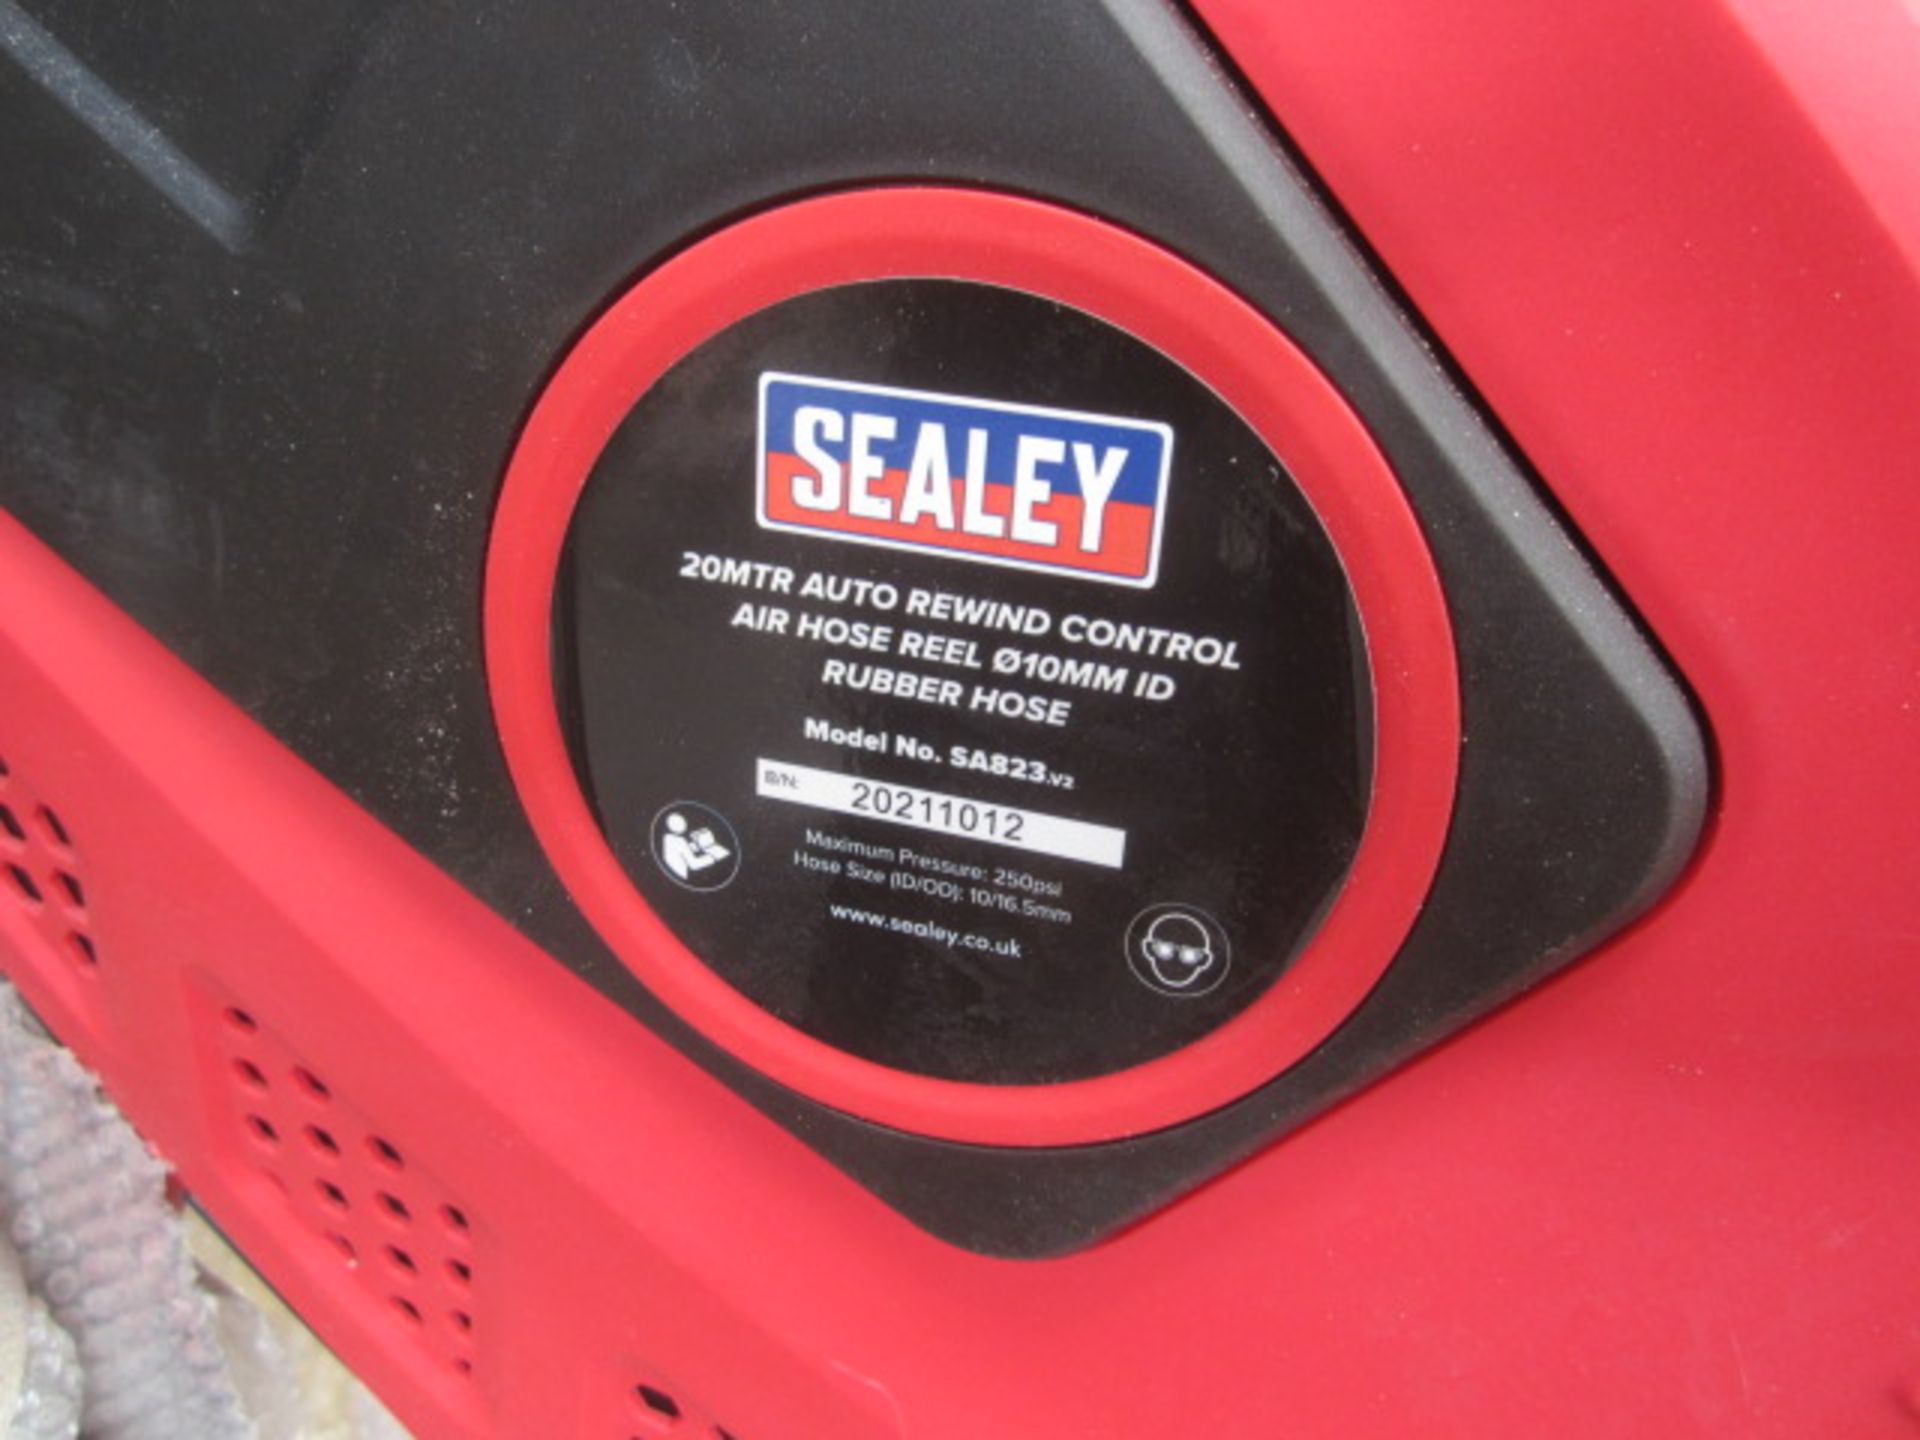 Sealey SA823 wall mounted 20m auto rewind air hose reel, serial no. 20211012 - Image 2 of 2